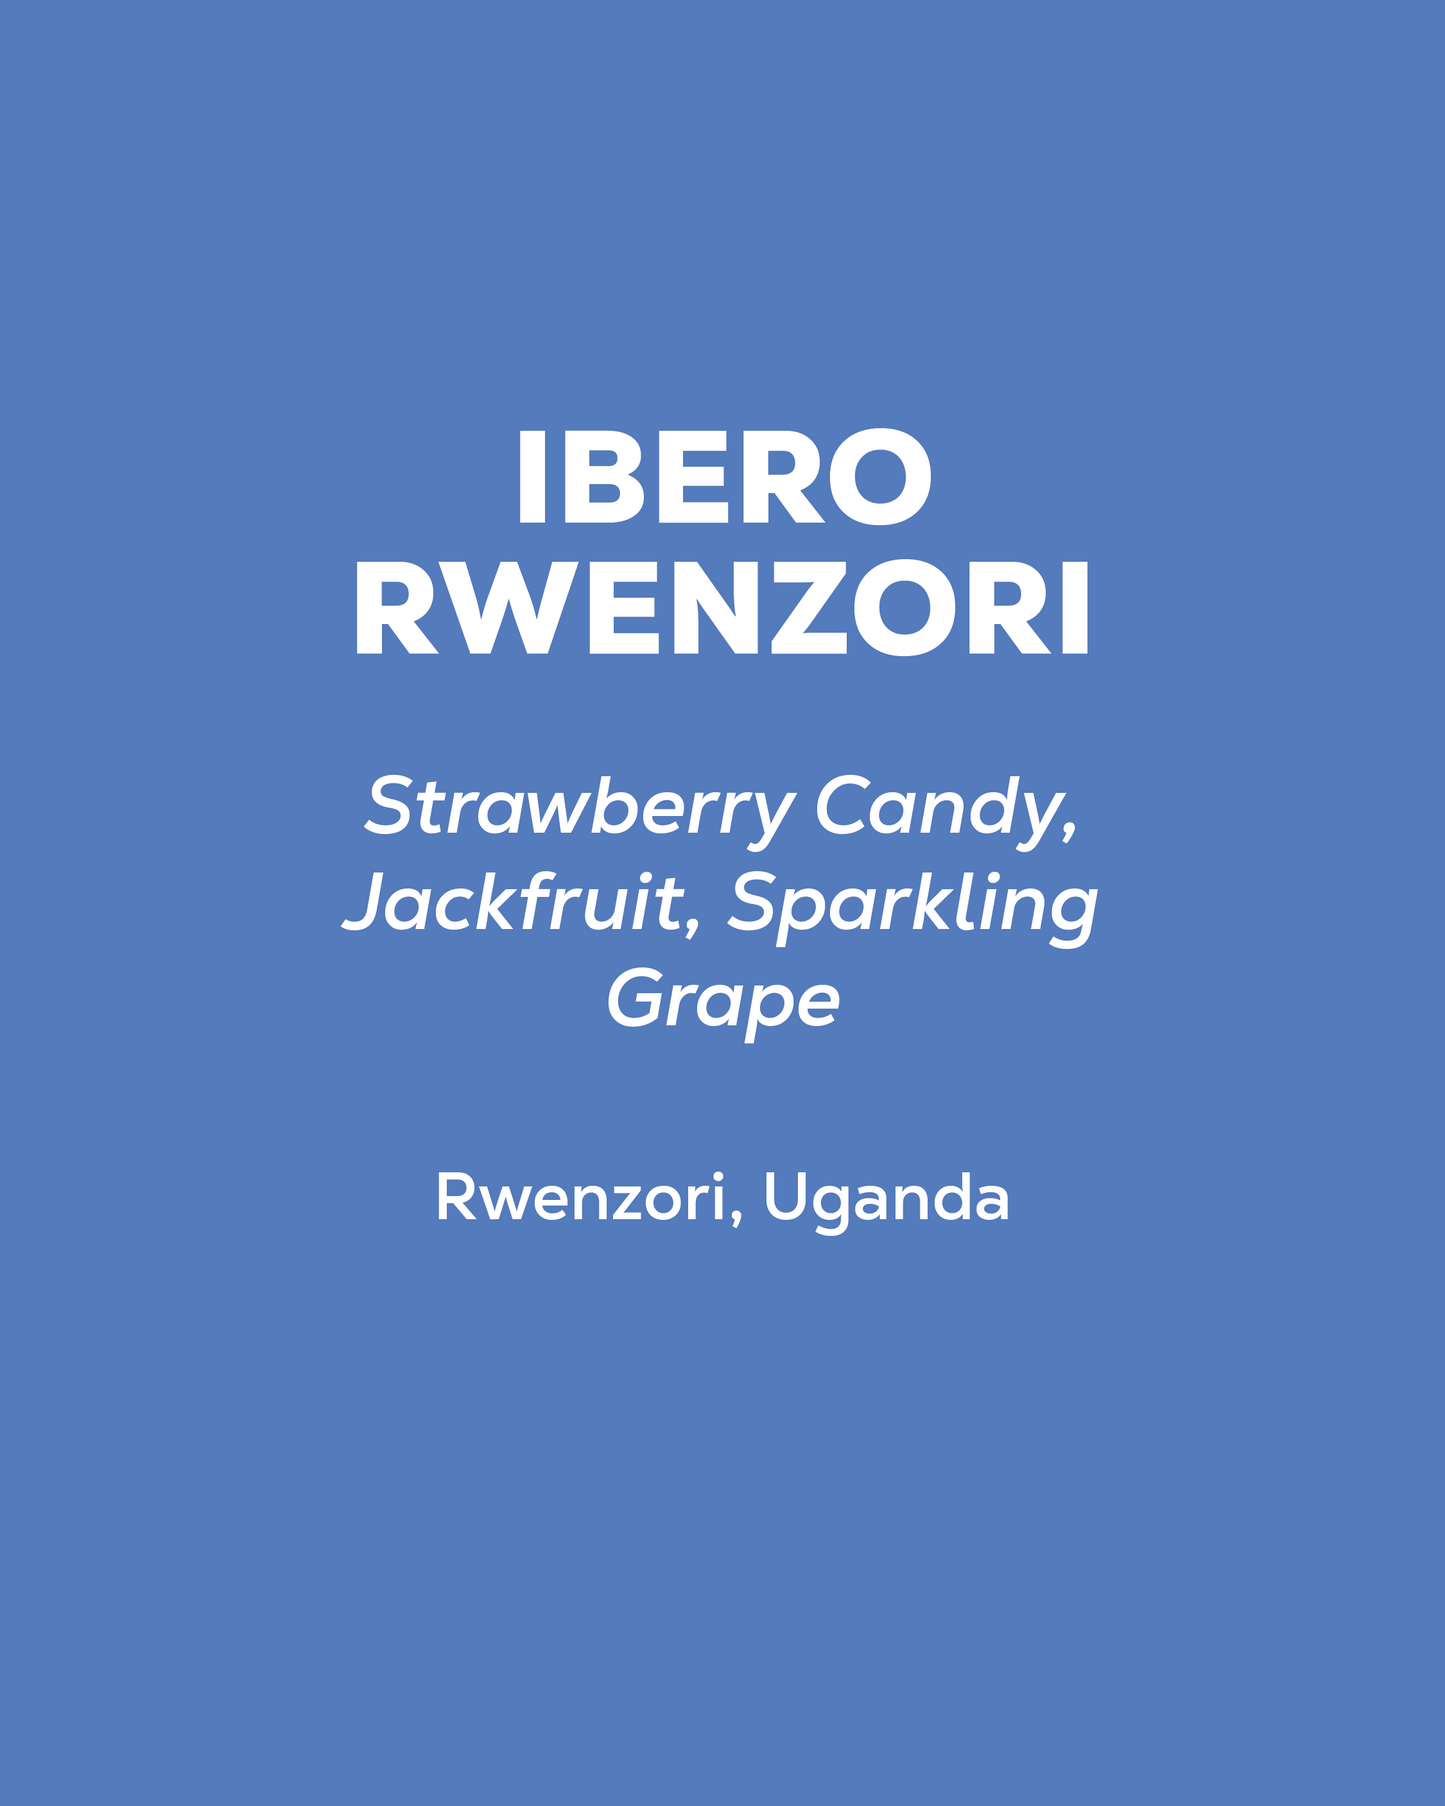 Uganda - Ibero Rwenzori